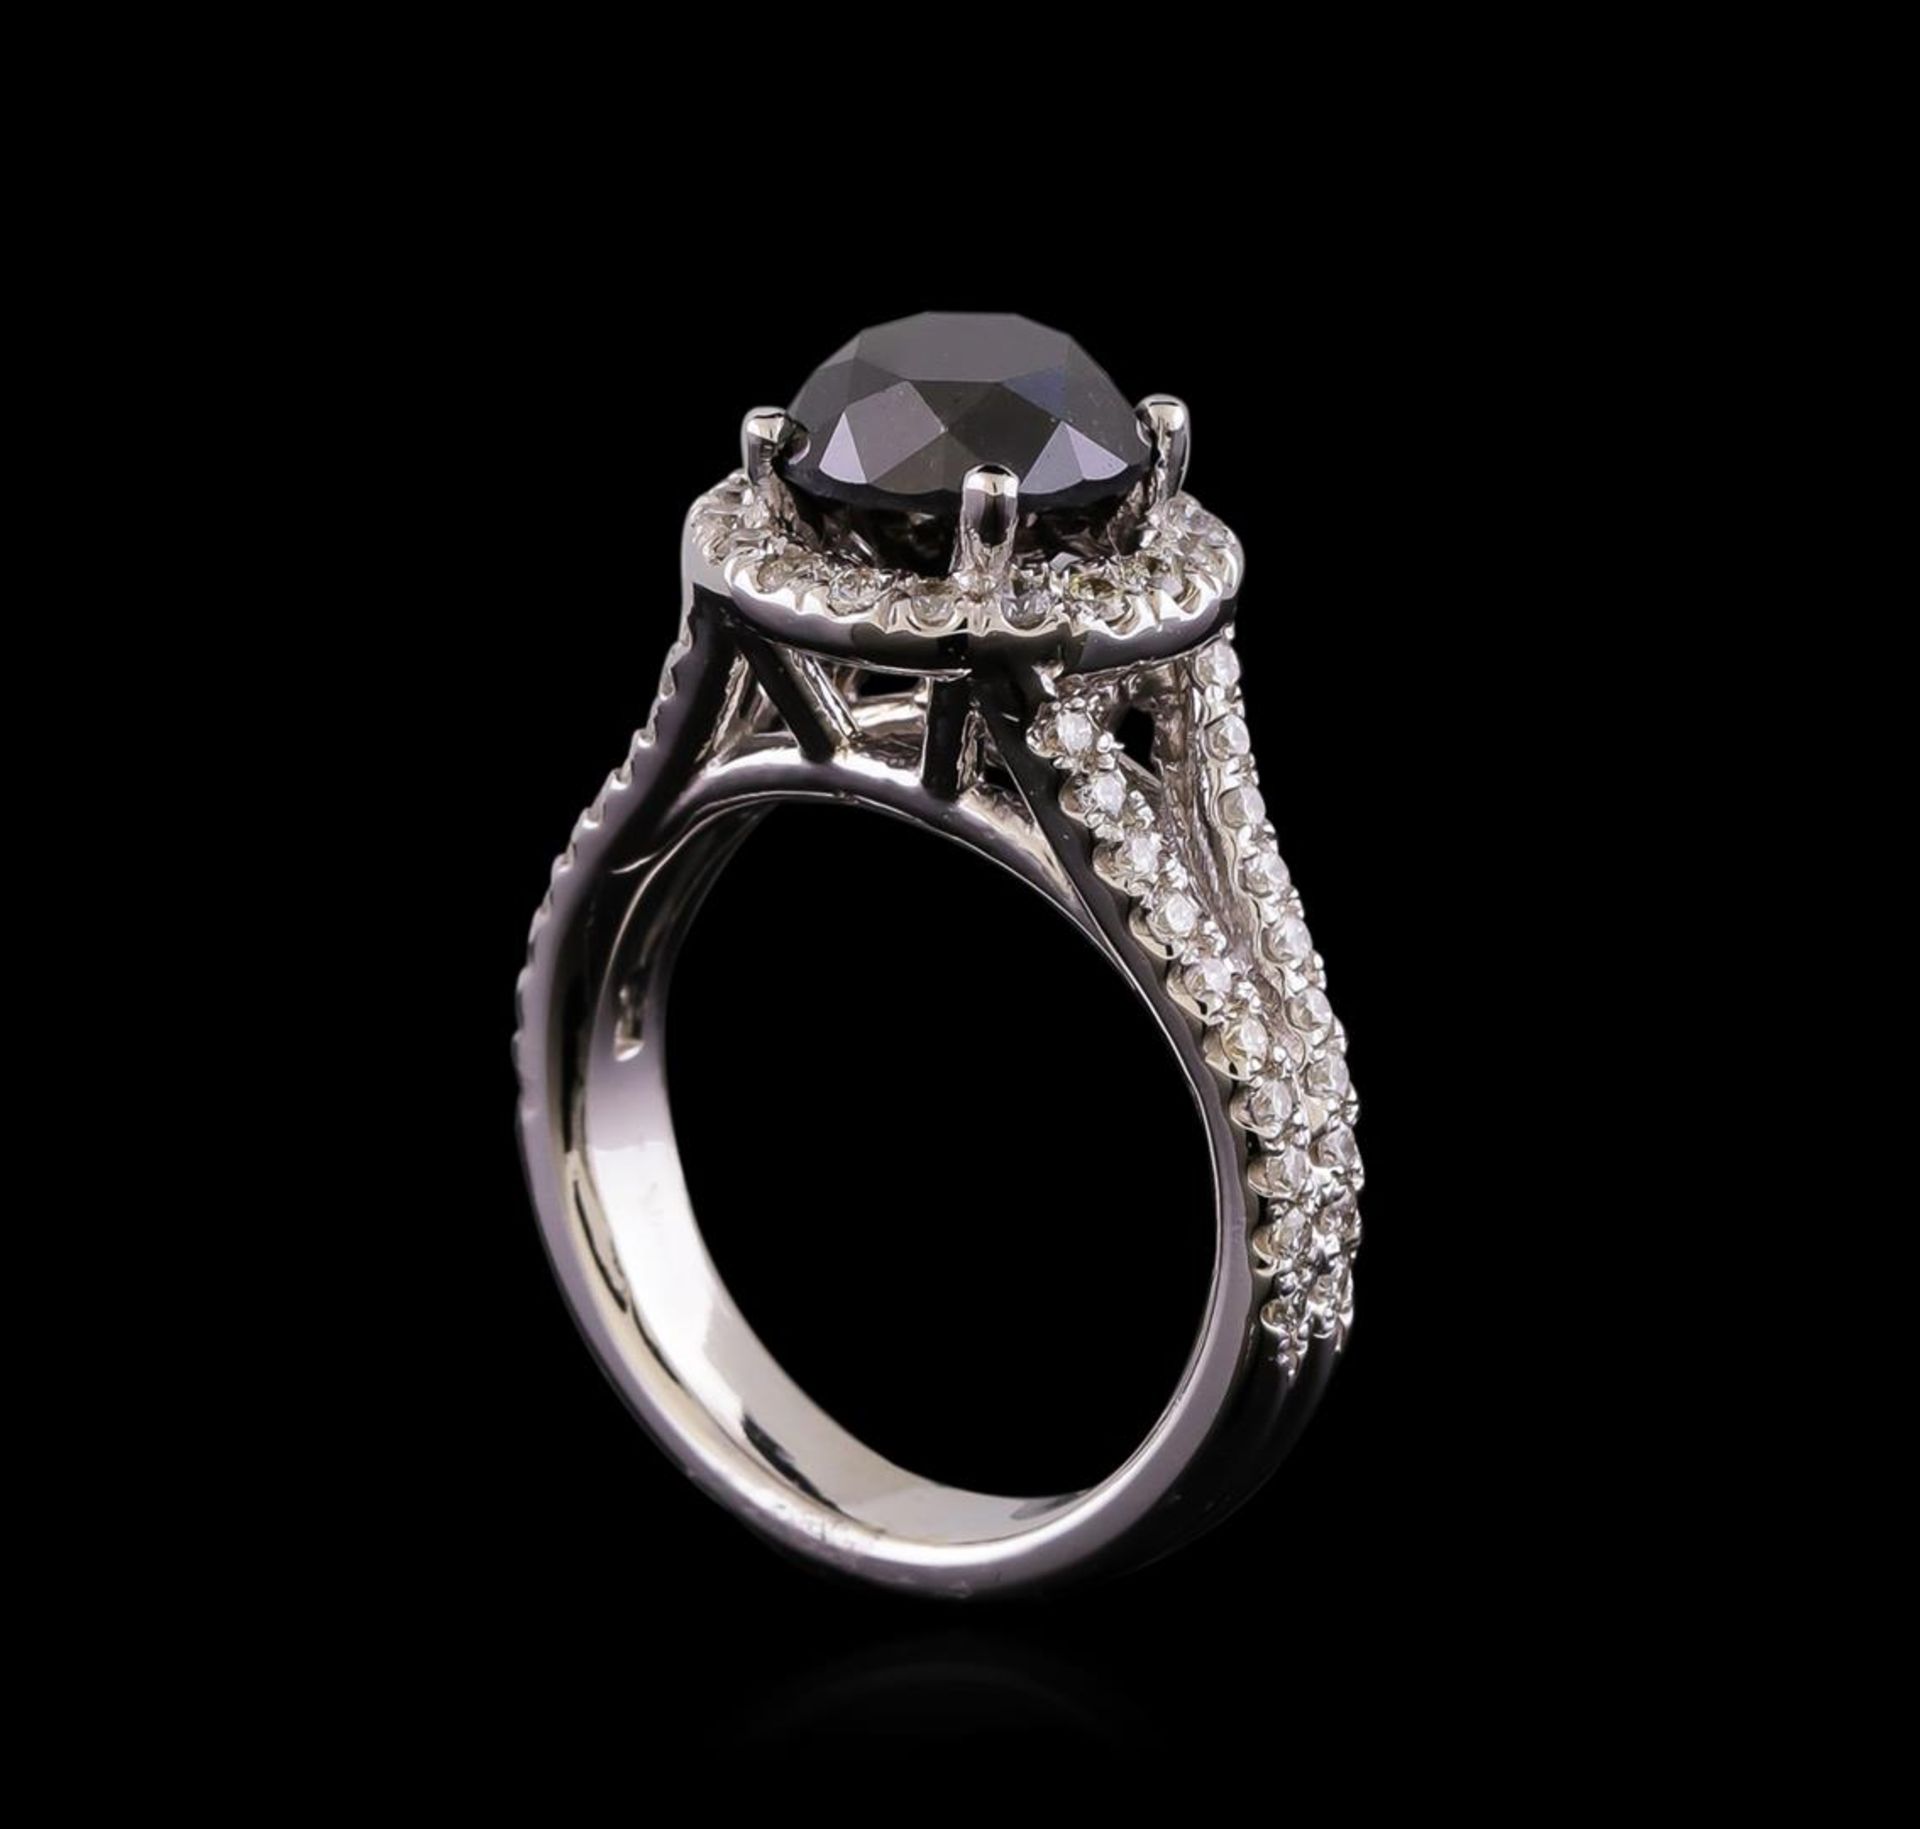 3.58 ctw Black Diamond Ring - 14KT White Gold - Image 4 of 5